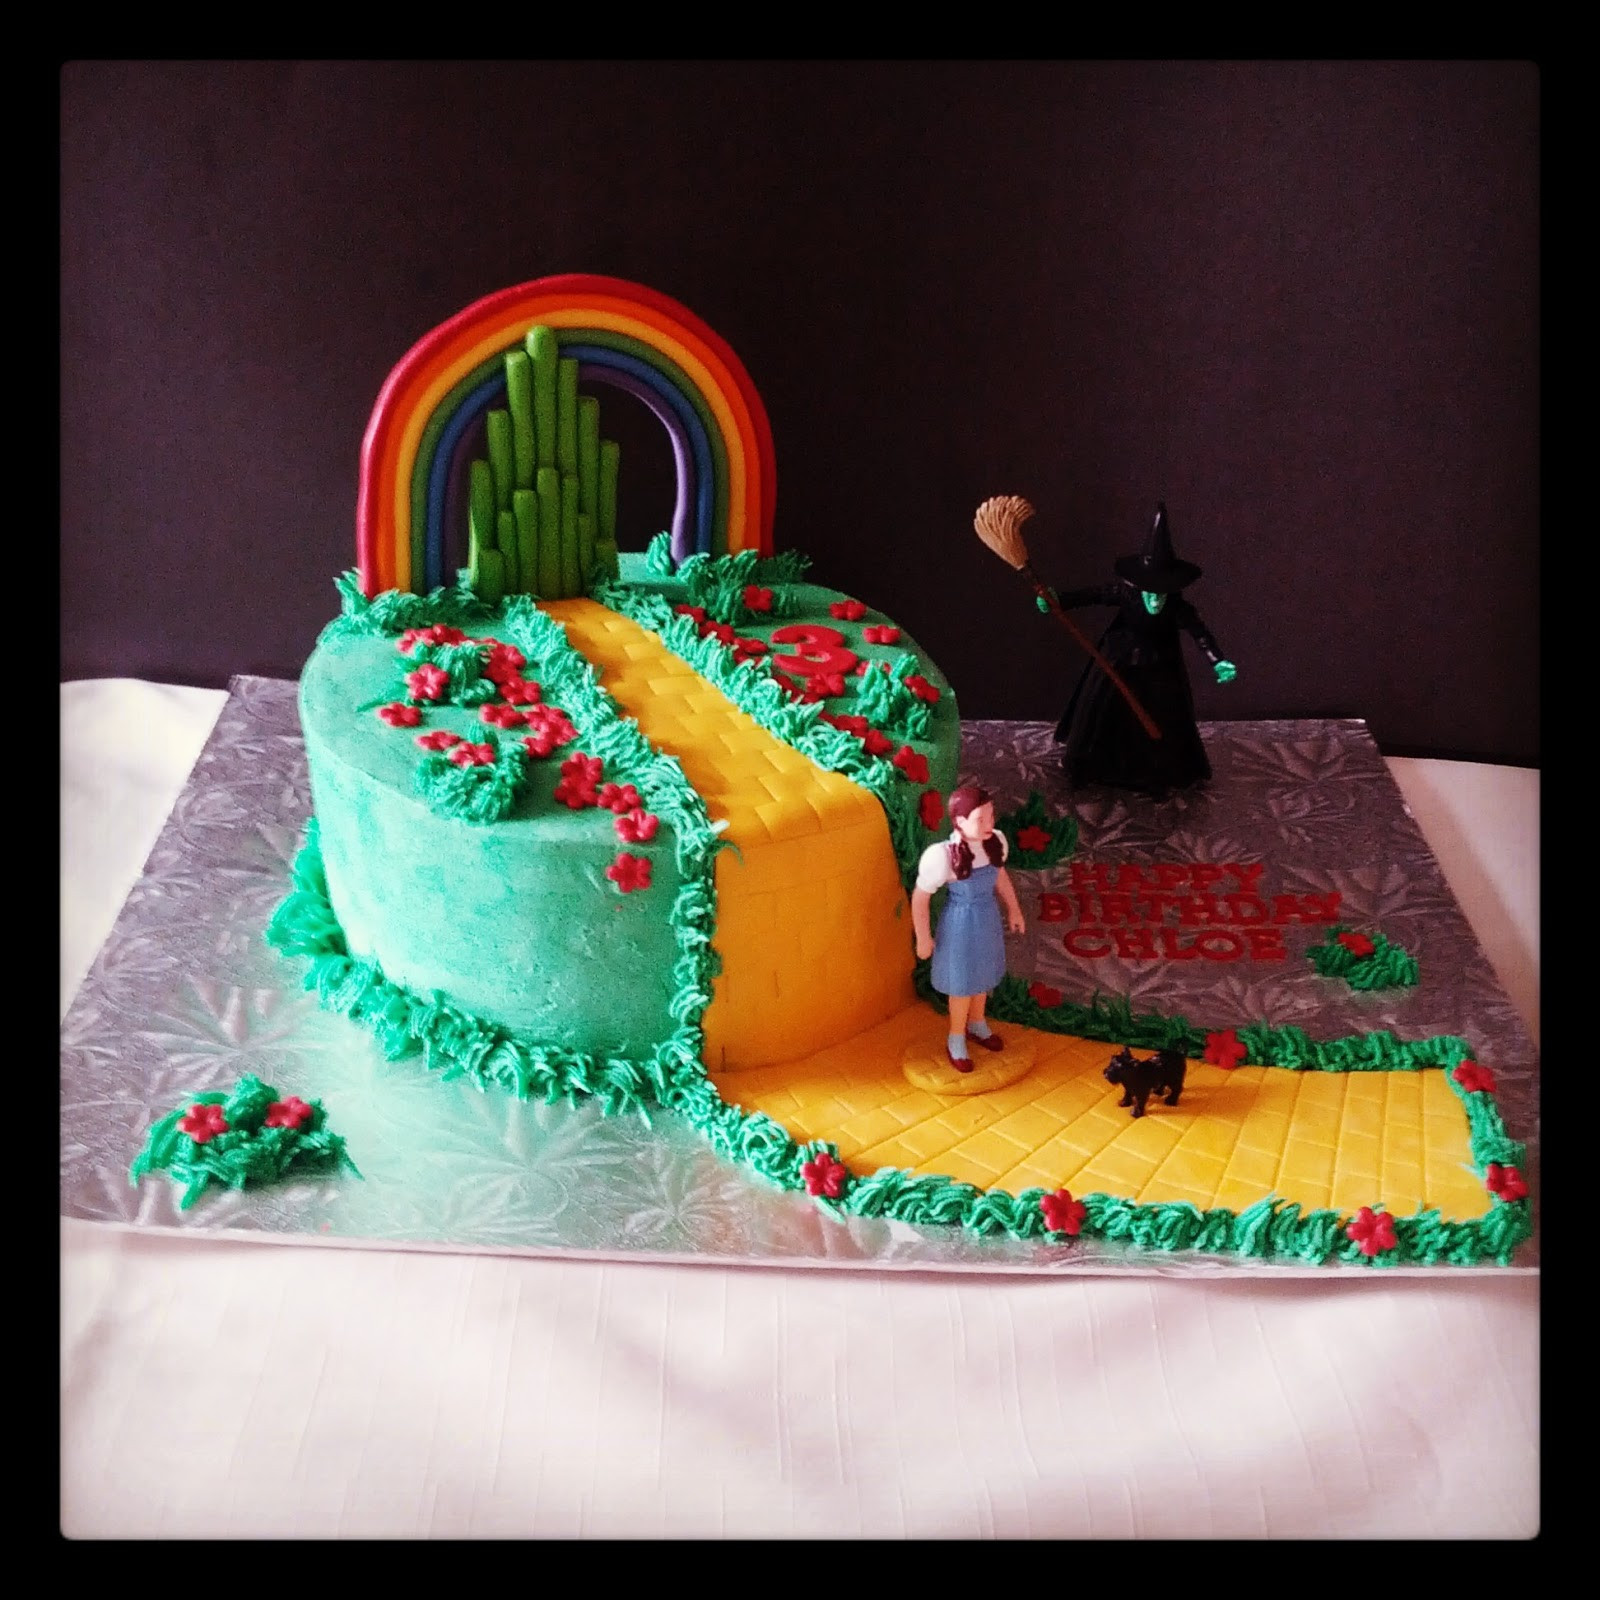 Wizard Of Oz Birthday Cake
 Second Generation Cake Design Wizard of Oz Birthday Cake